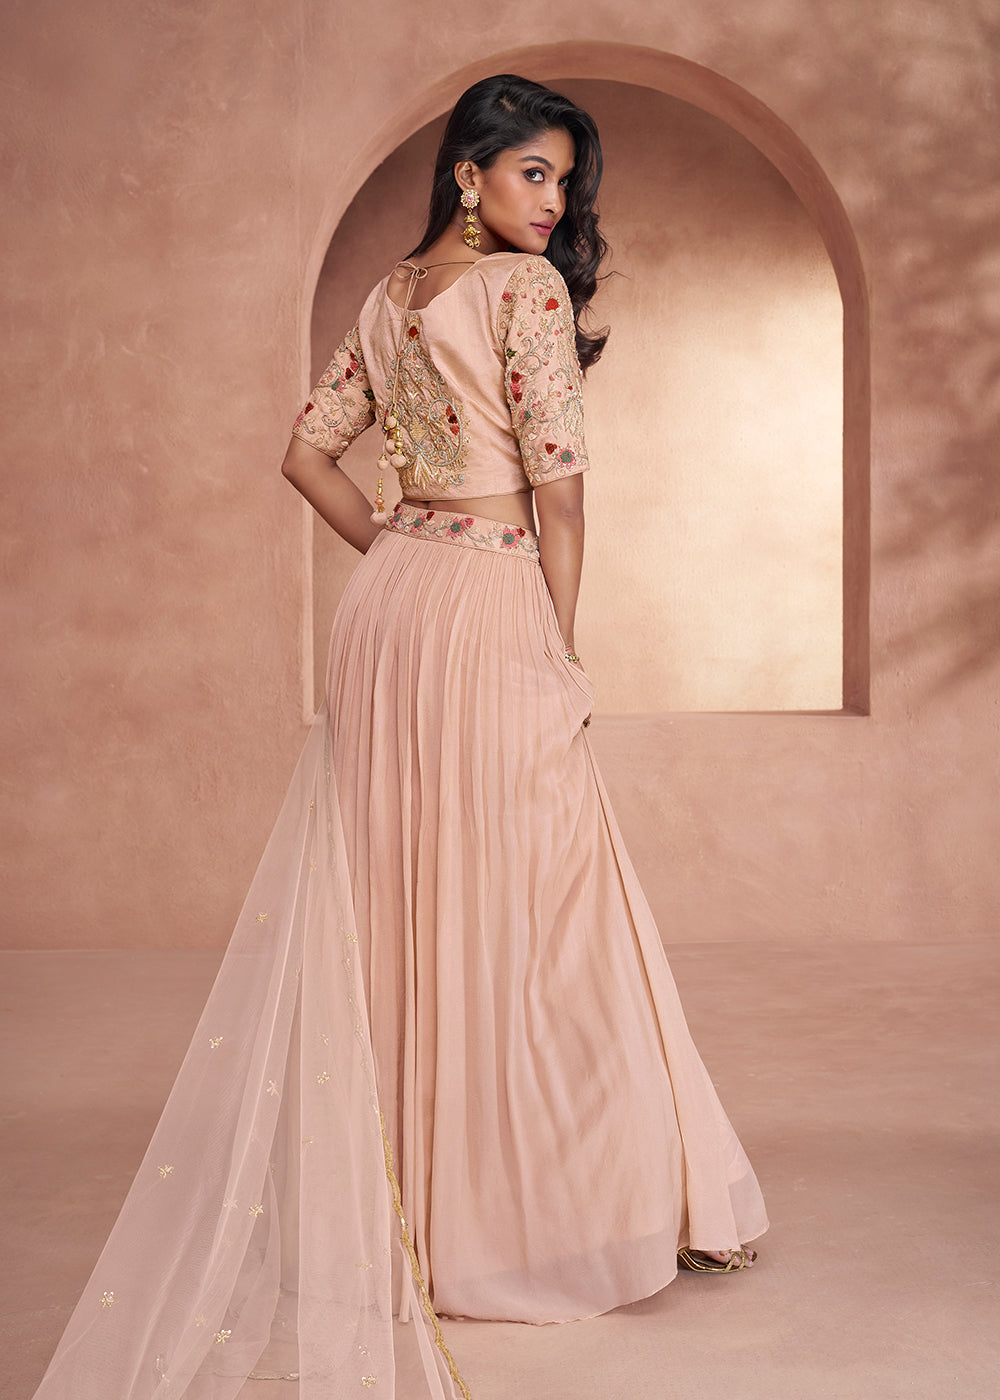 Buy Now Blush Peach Premium Silk Designer Party Wear Lehenga Choli Online in USA, UK, Canada & Worldwide at Empress Clothing.